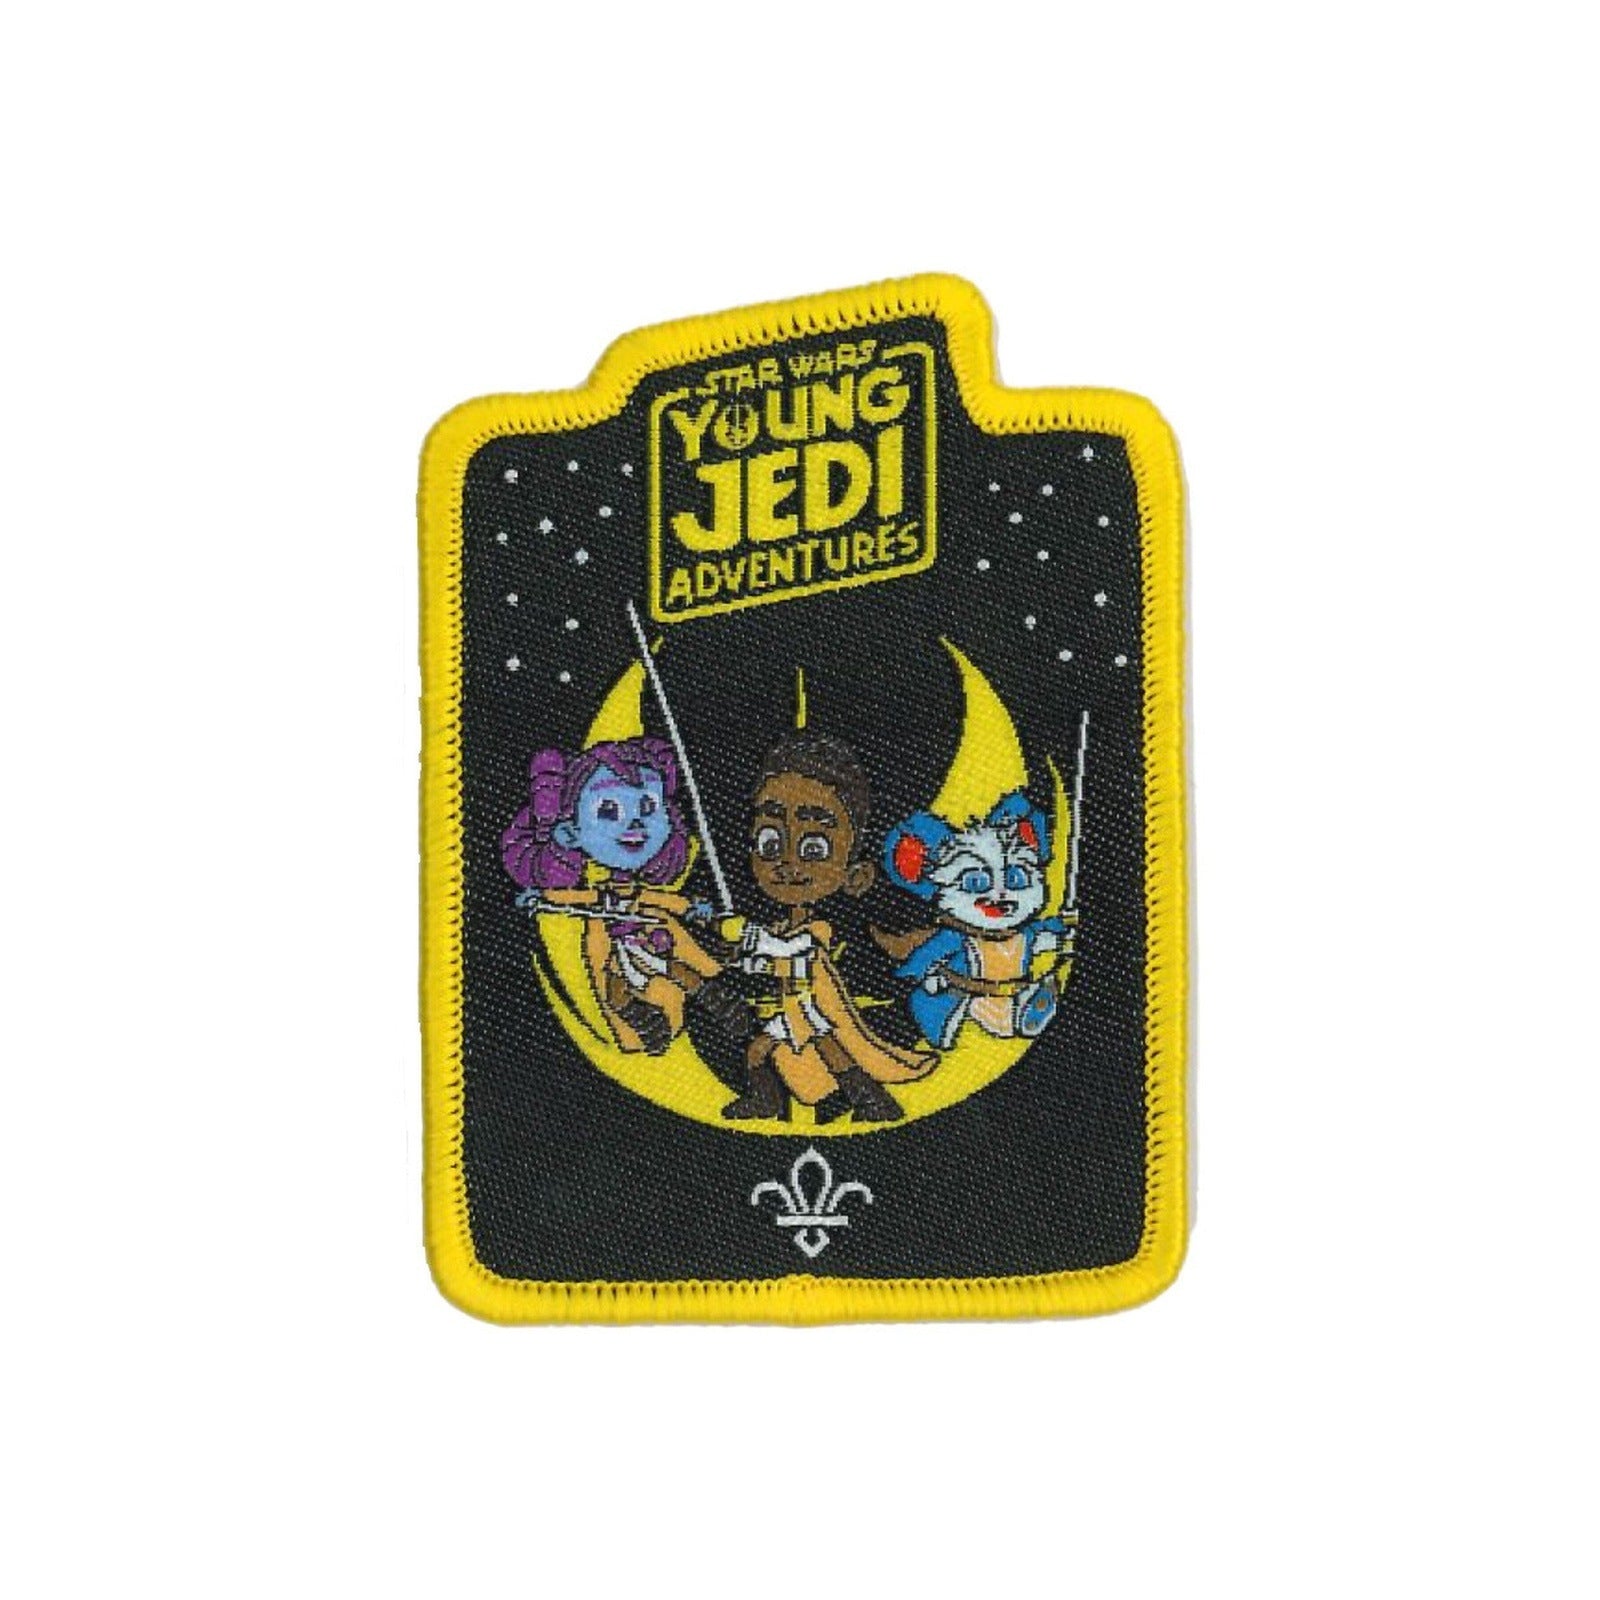 Star Wars Young Jedi Adventure Blanket Badge